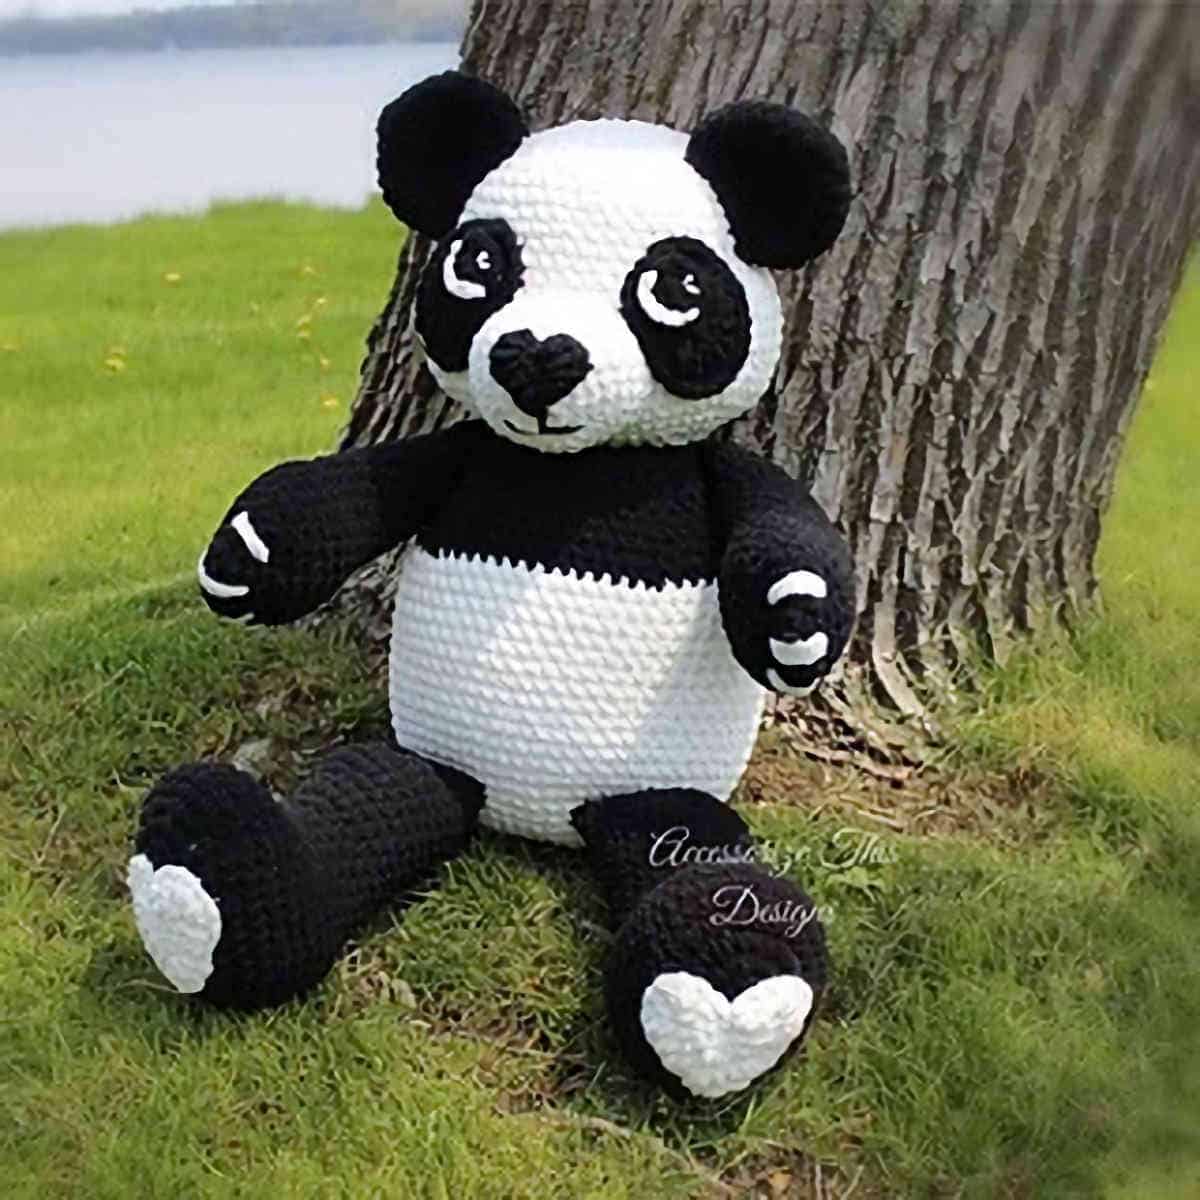 Crocheted large panda toy sitting next to tree.